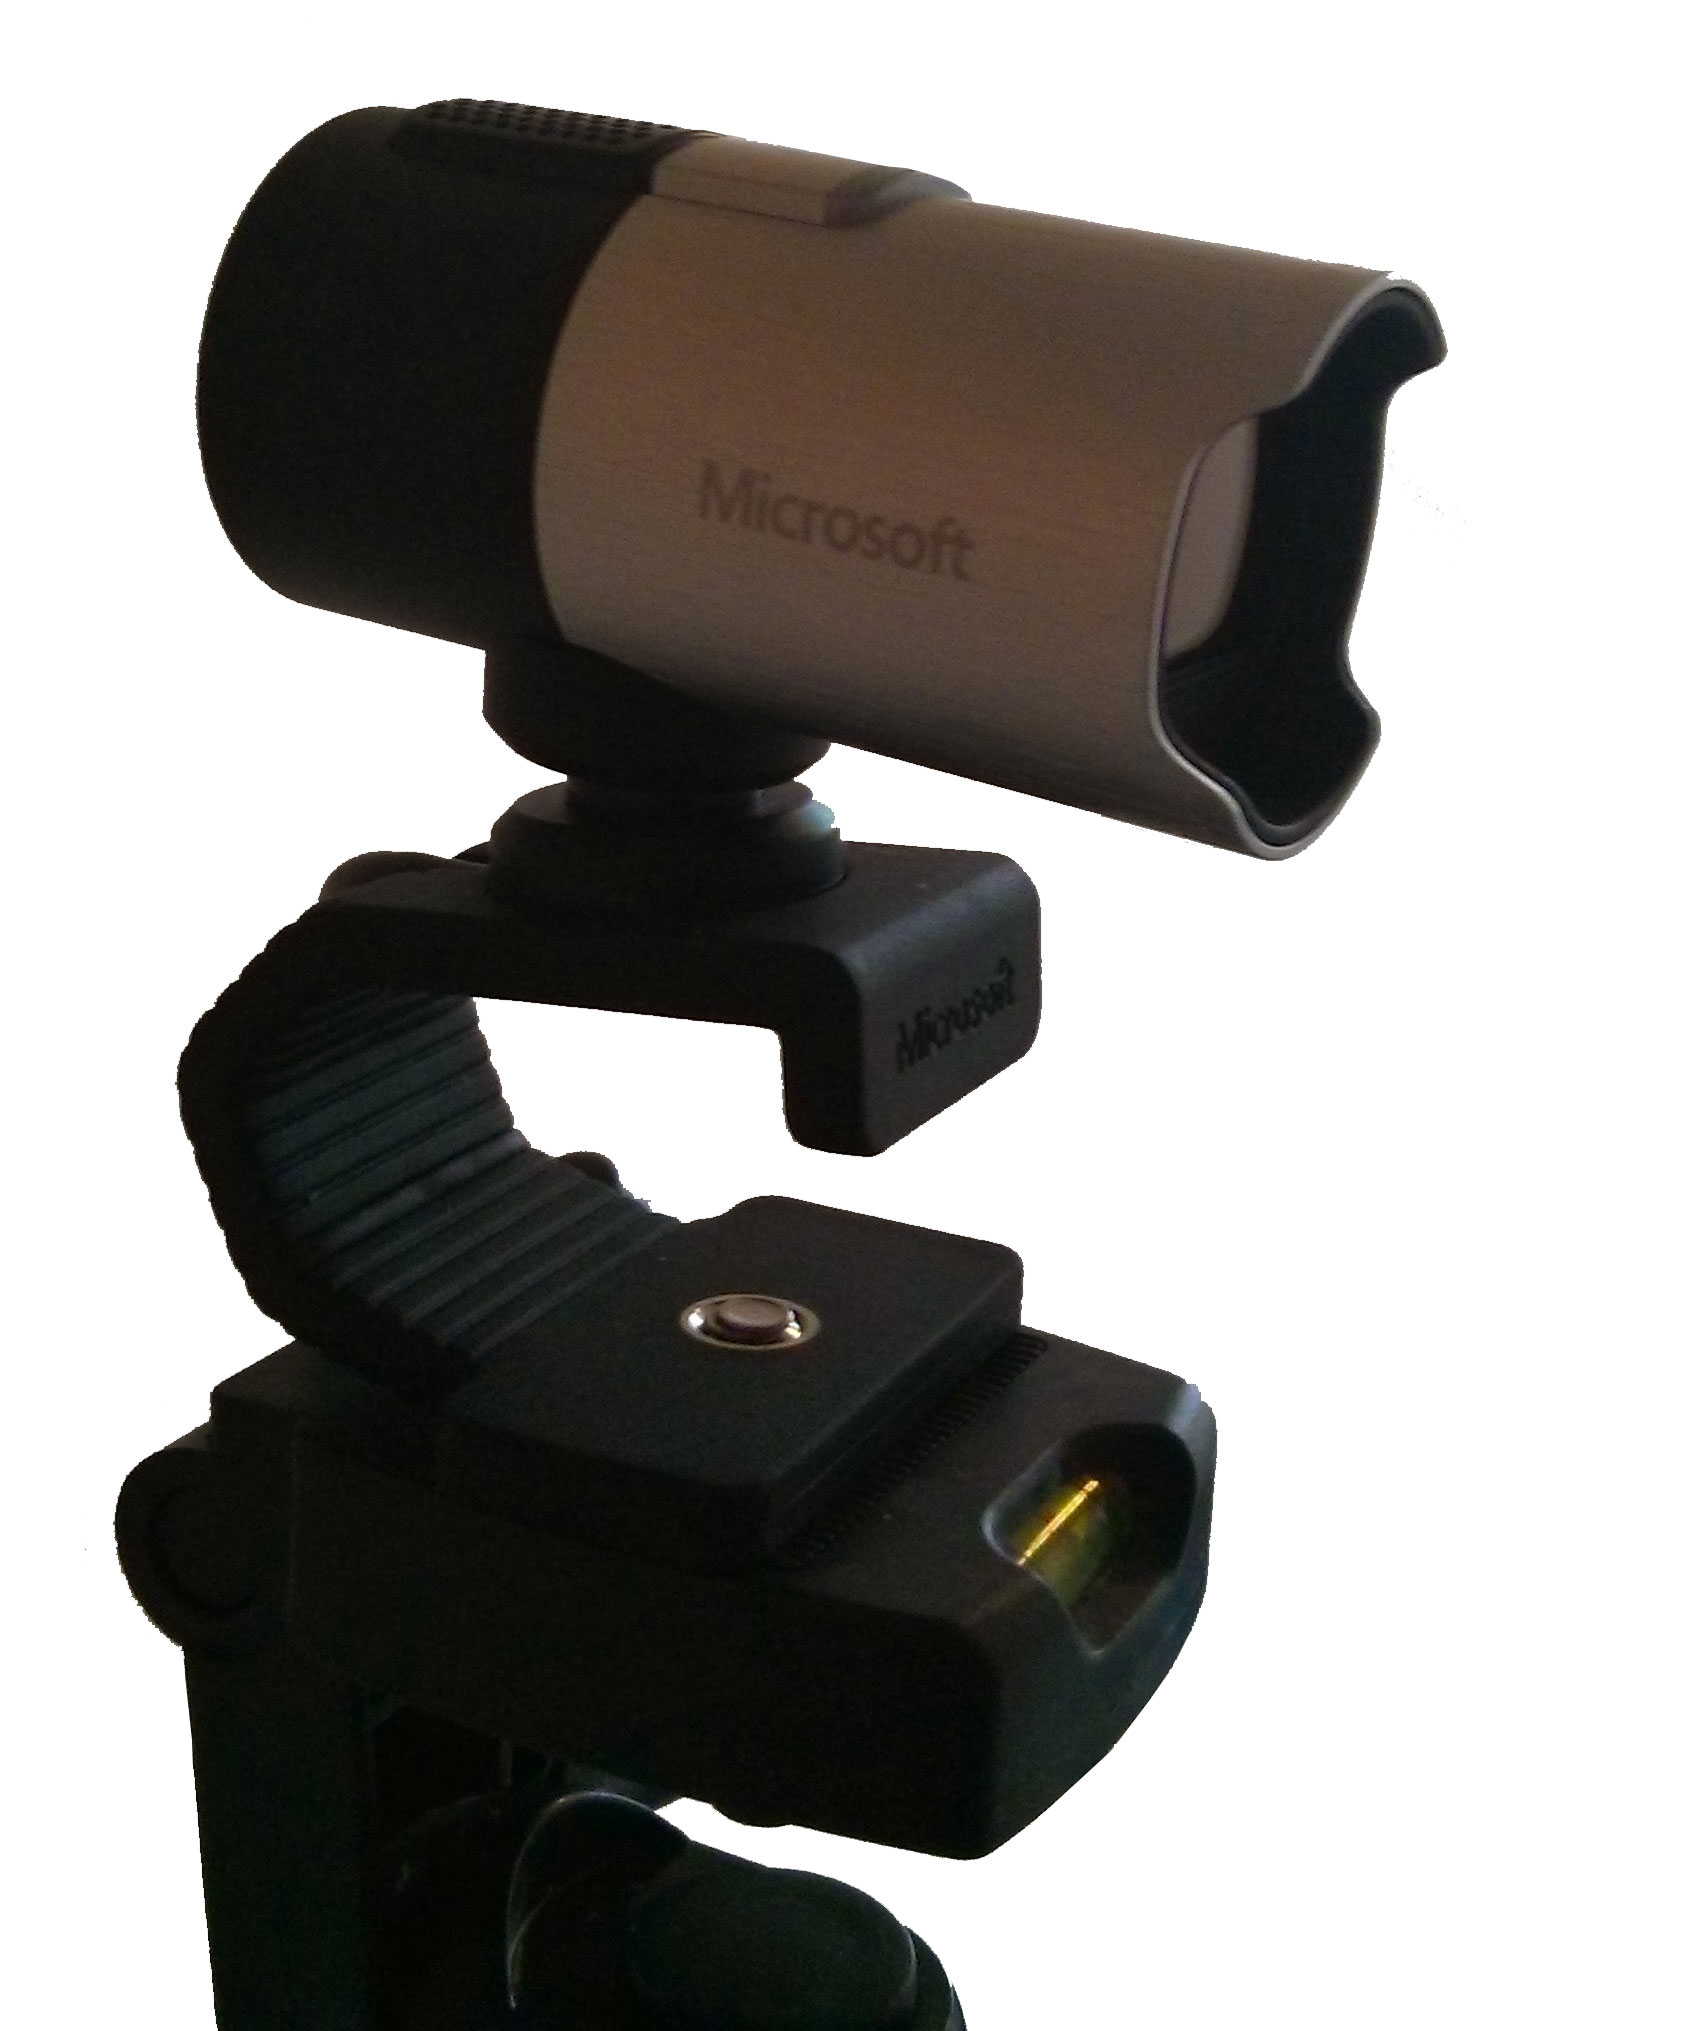 Microsoft Lifecam Studio Webcam and Tripod